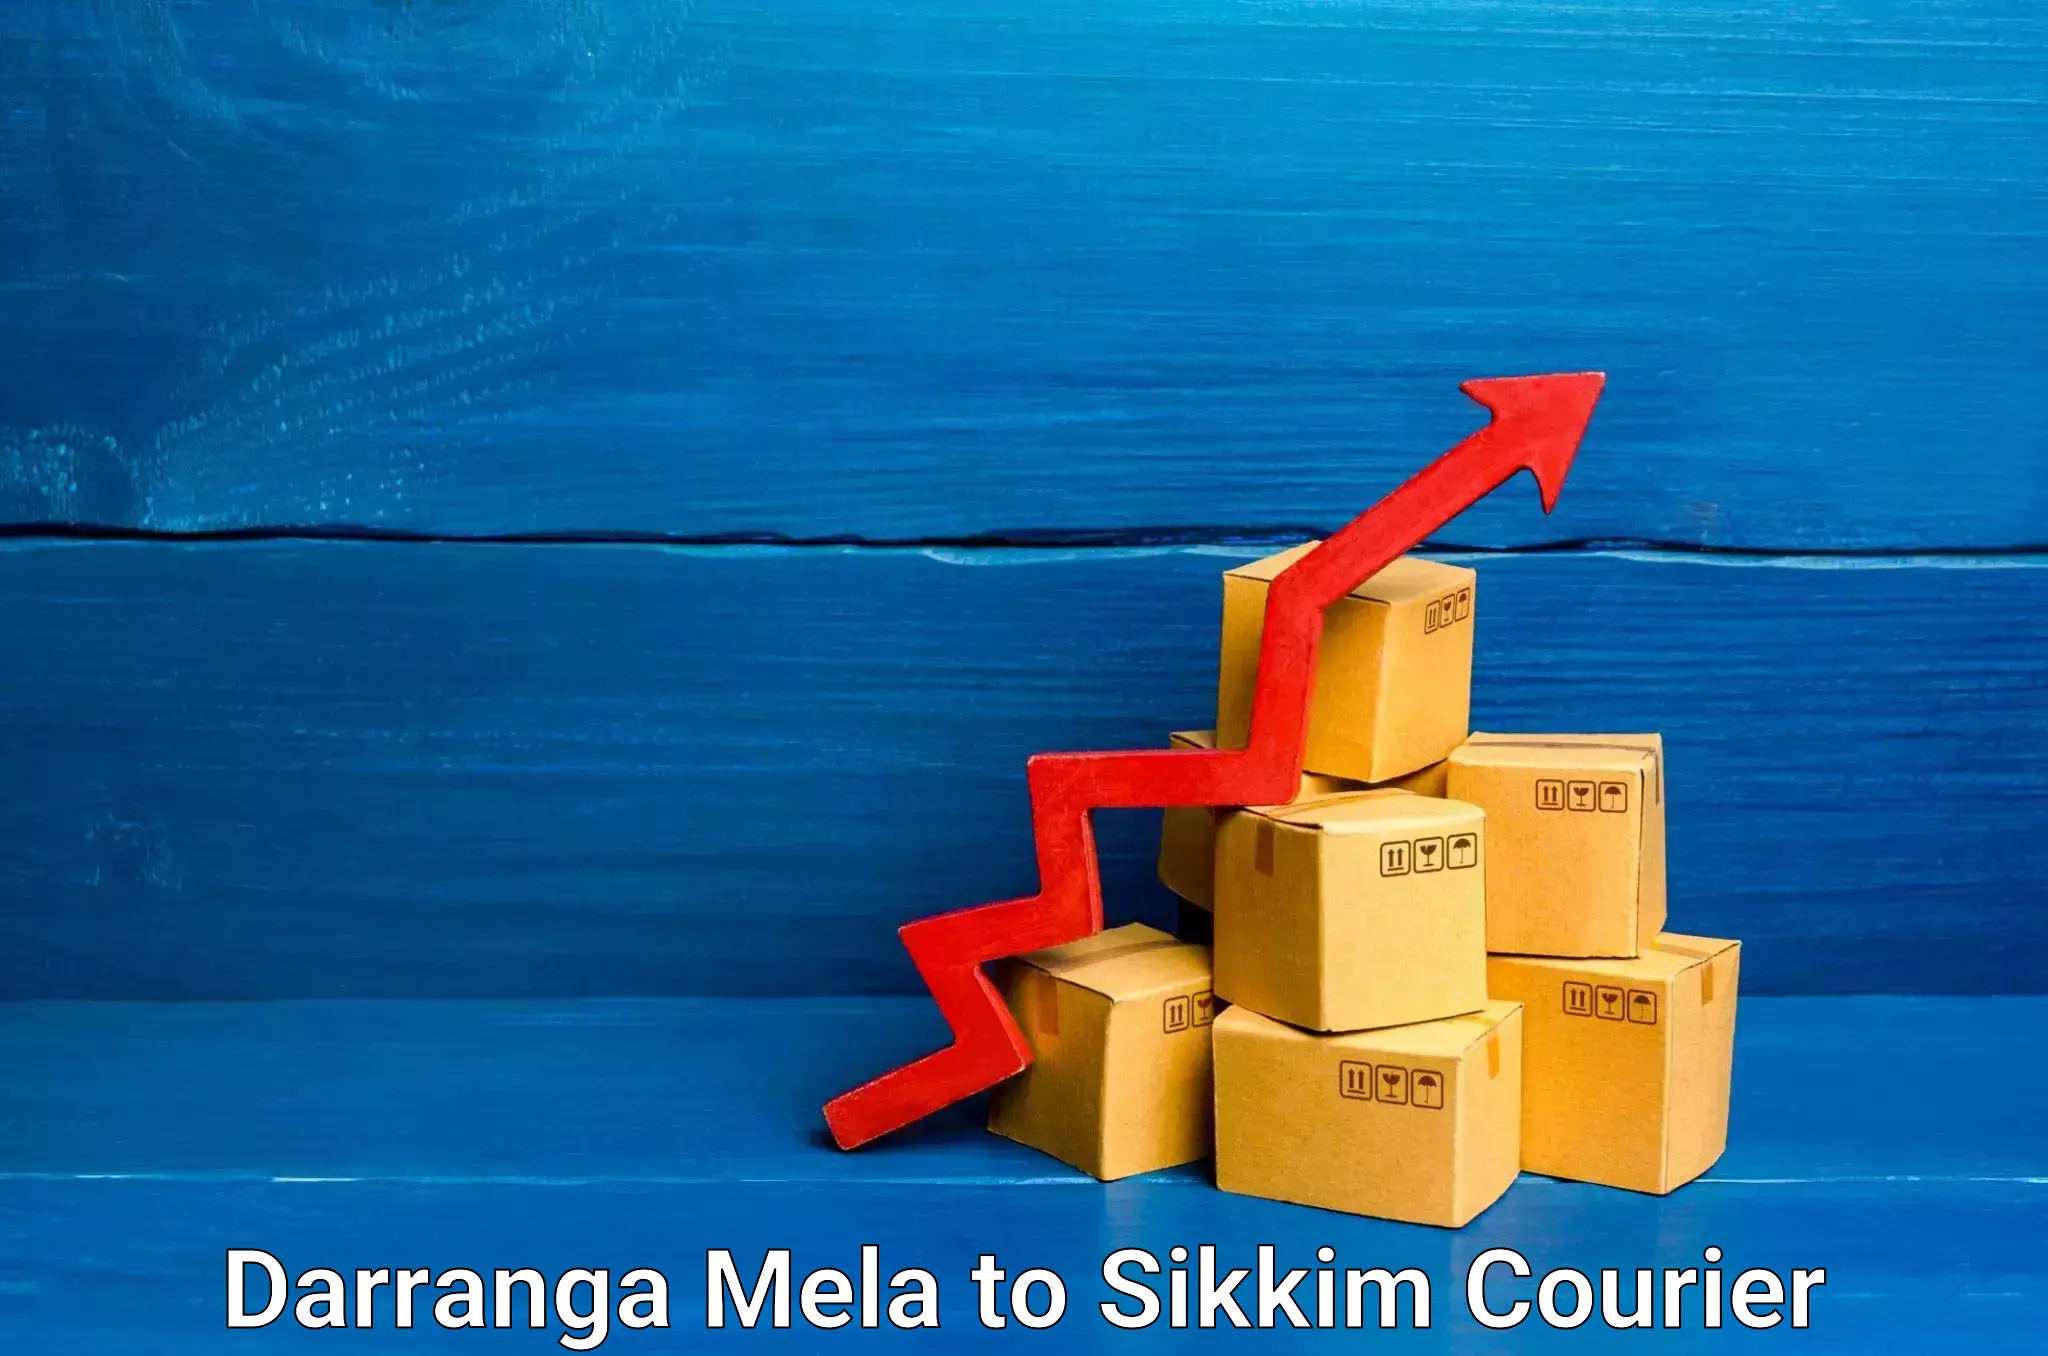 Express delivery capabilities Darranga Mela to West Sikkim